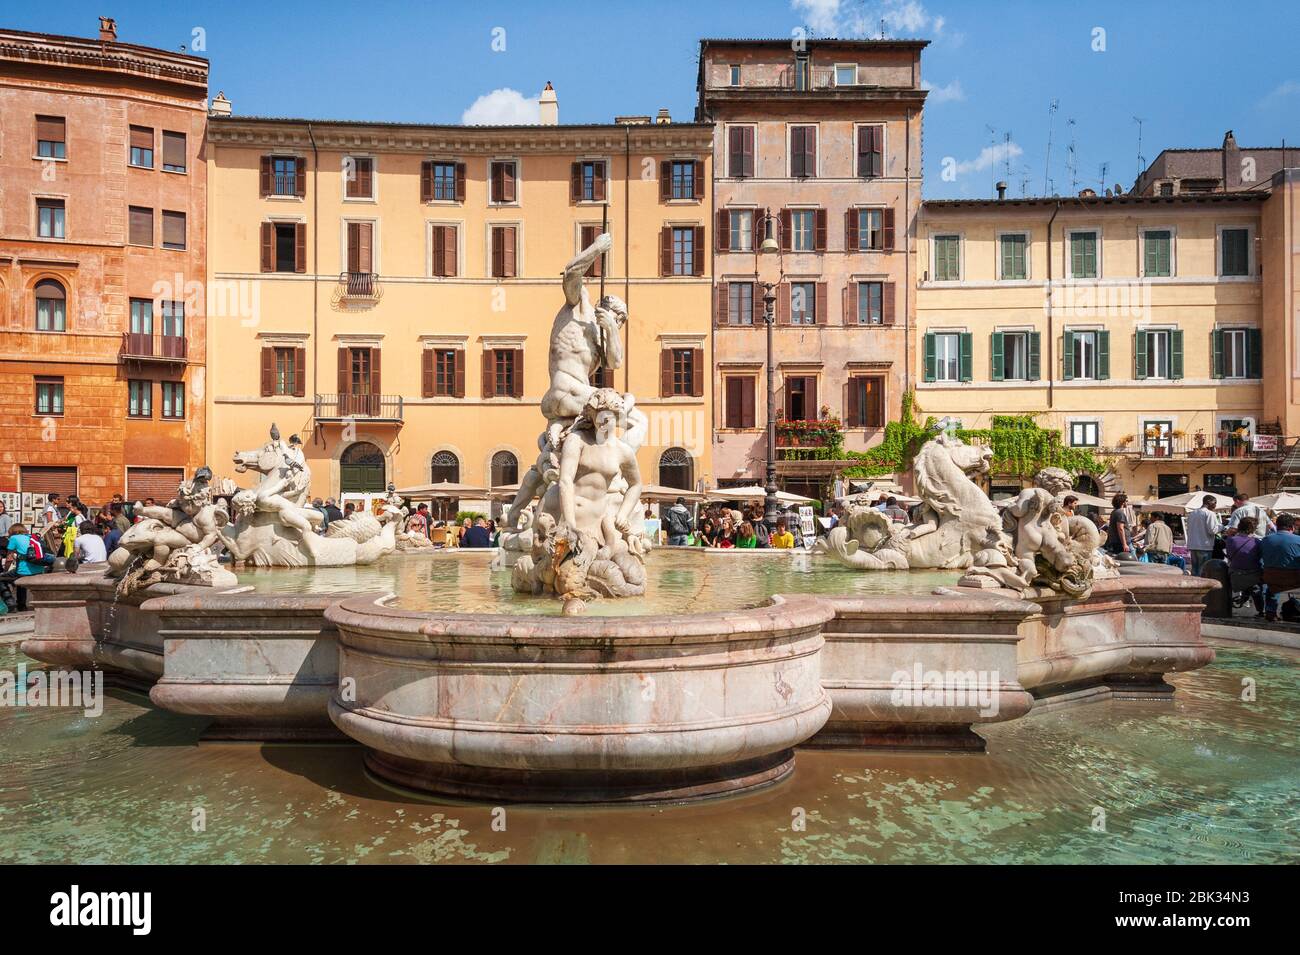 Fontana di Nettuno / Fontana del Neptune / Fountain of Neptune in Piazza Navona Rome Rome Italy Stock Photo